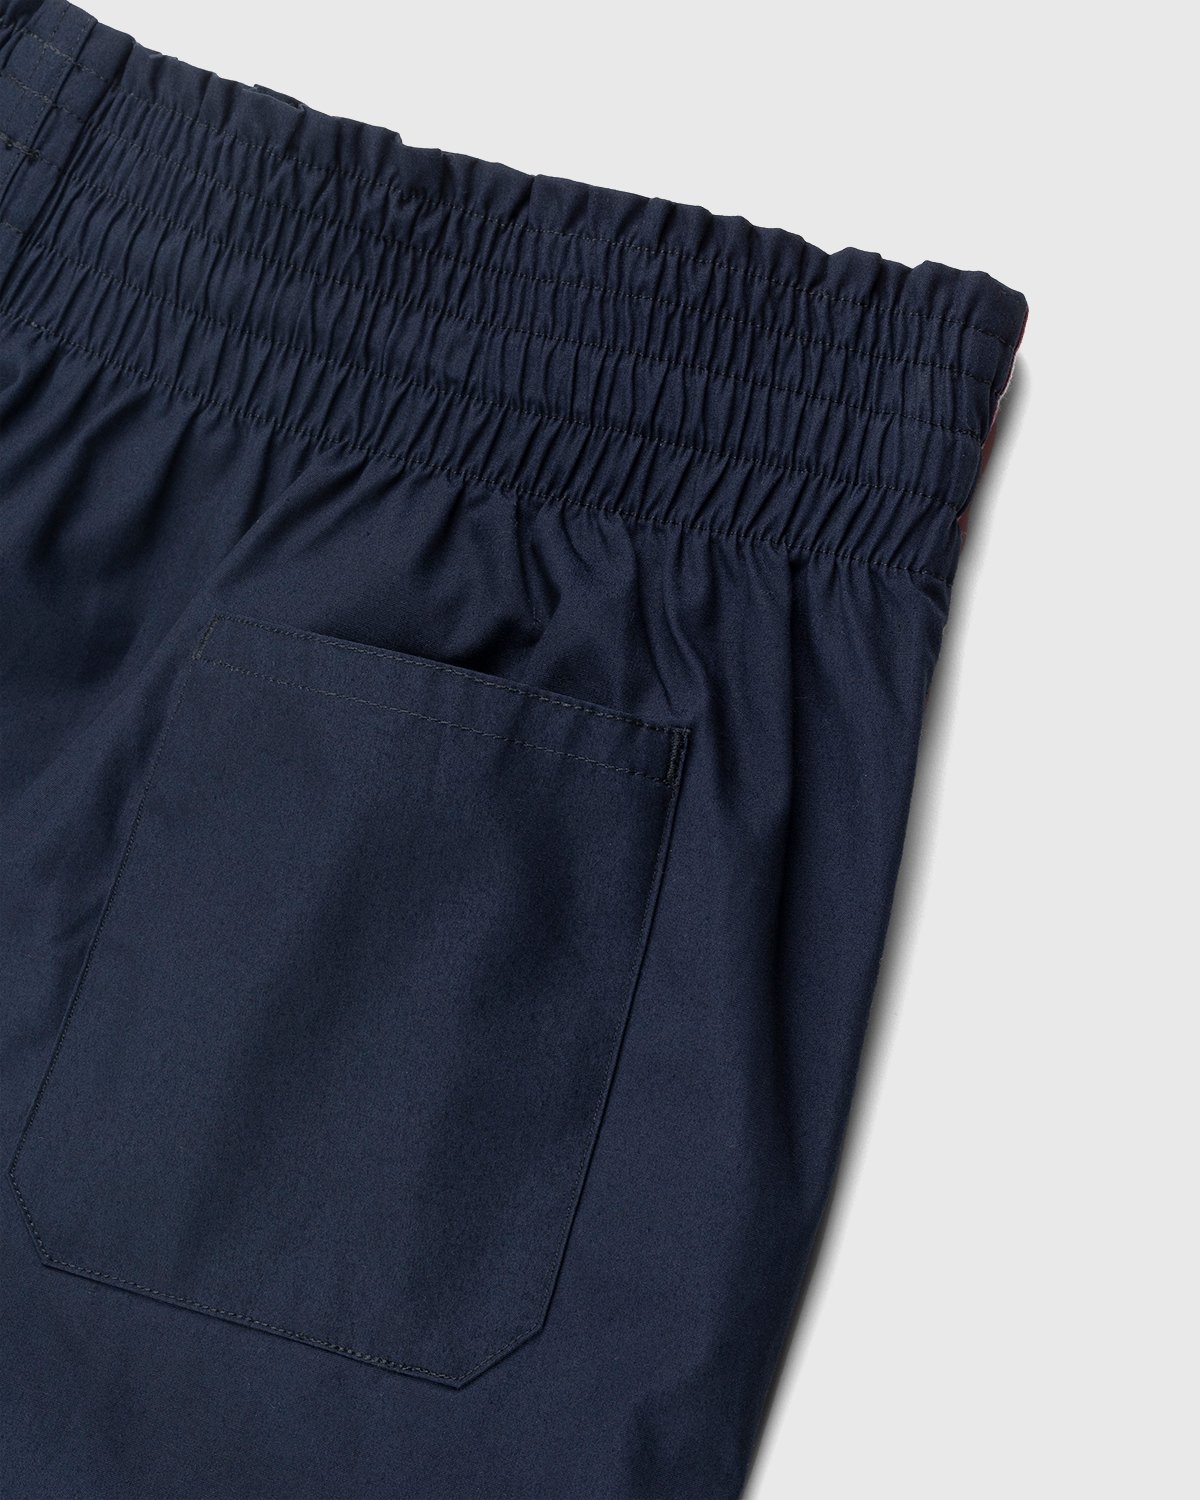 Acne Studios – Elastic Waist Contrast Shorts Navy - Short Cuts - Blue - Image 6